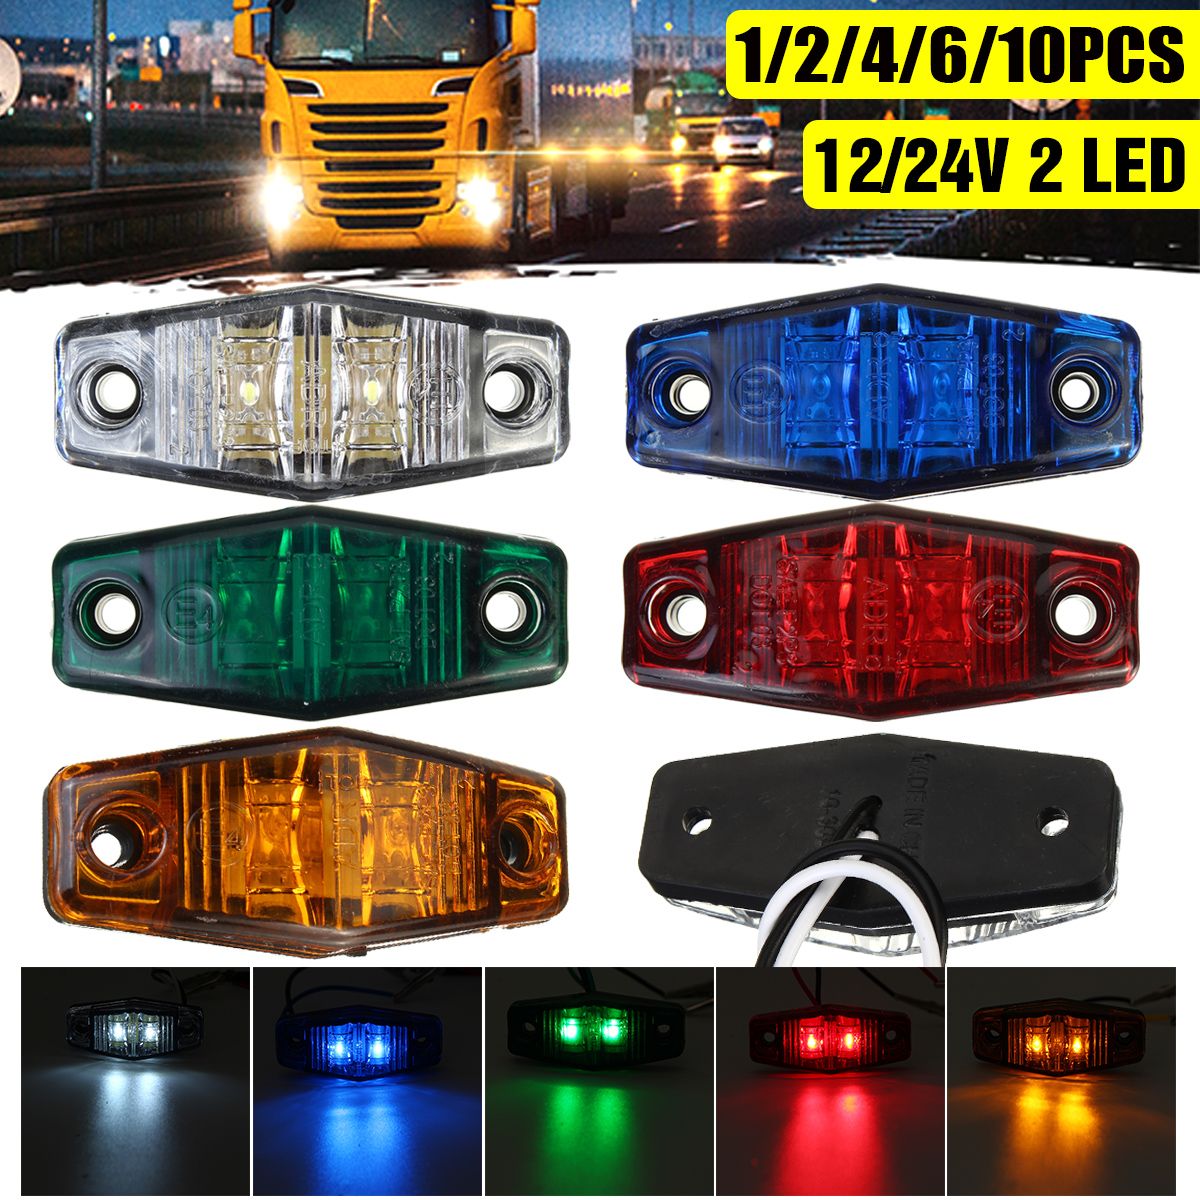 2LED-Side-Marker-Indicator-Light-Clearance-Lamp-For-1224V-Truck-Trailer-Lorry-Van-1727304